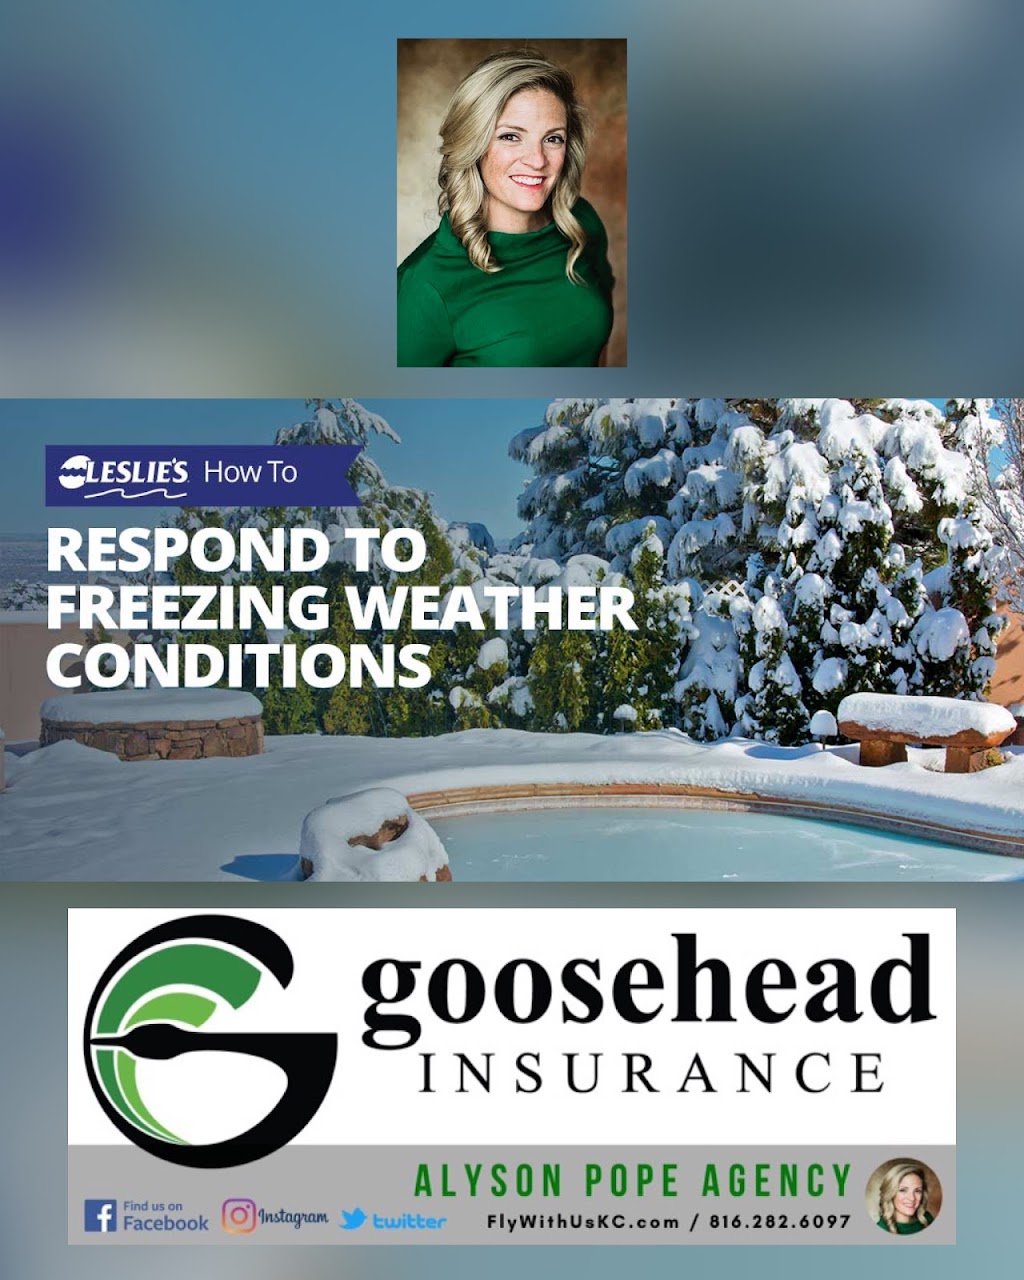 Goosehead Insurance - Alyson Pope Agency | 4967 NE Goodview Cir Suite B, Lees Summit, MO 64064, USA | Phone: (816) 607-9908